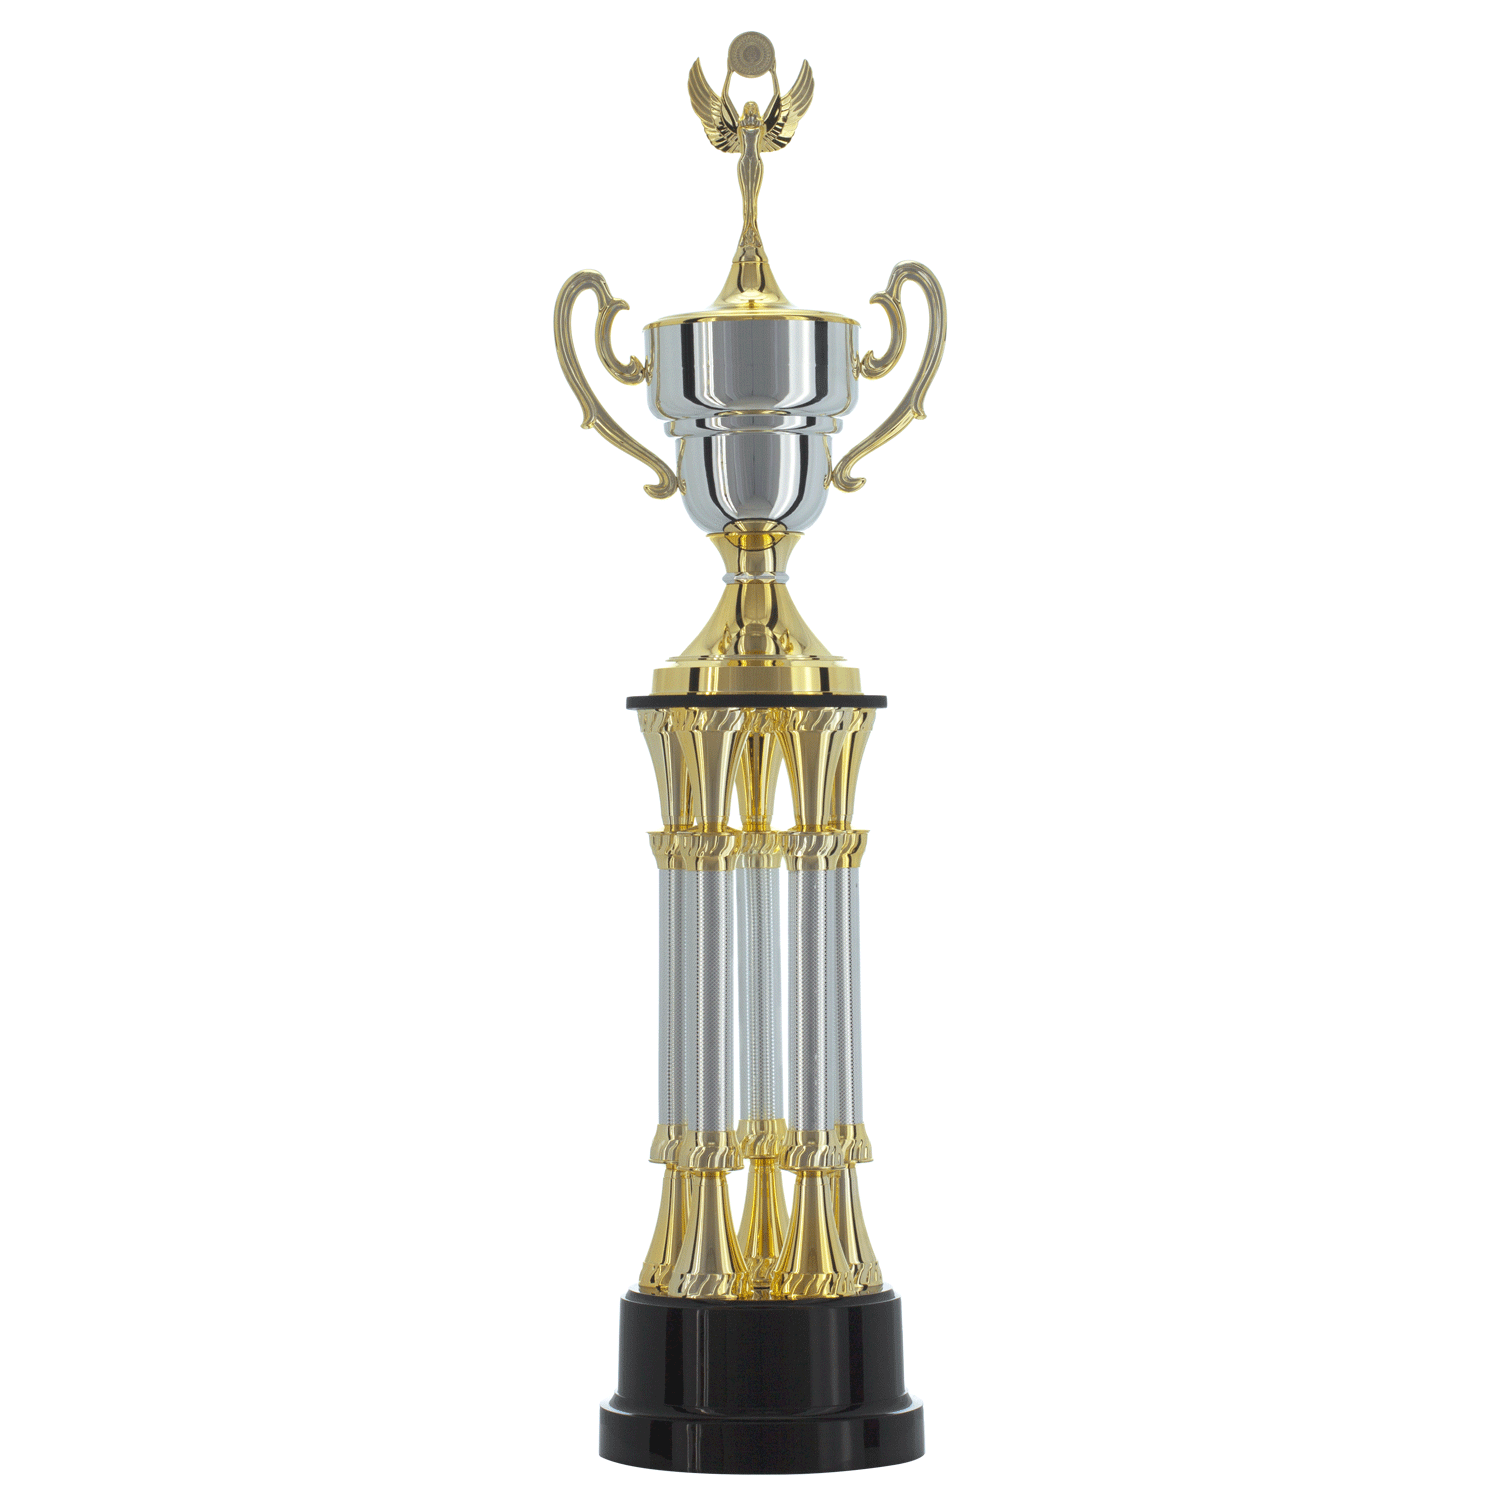 Large Trophy Cup | Venko Brazilian Line Trophy | Express Medals